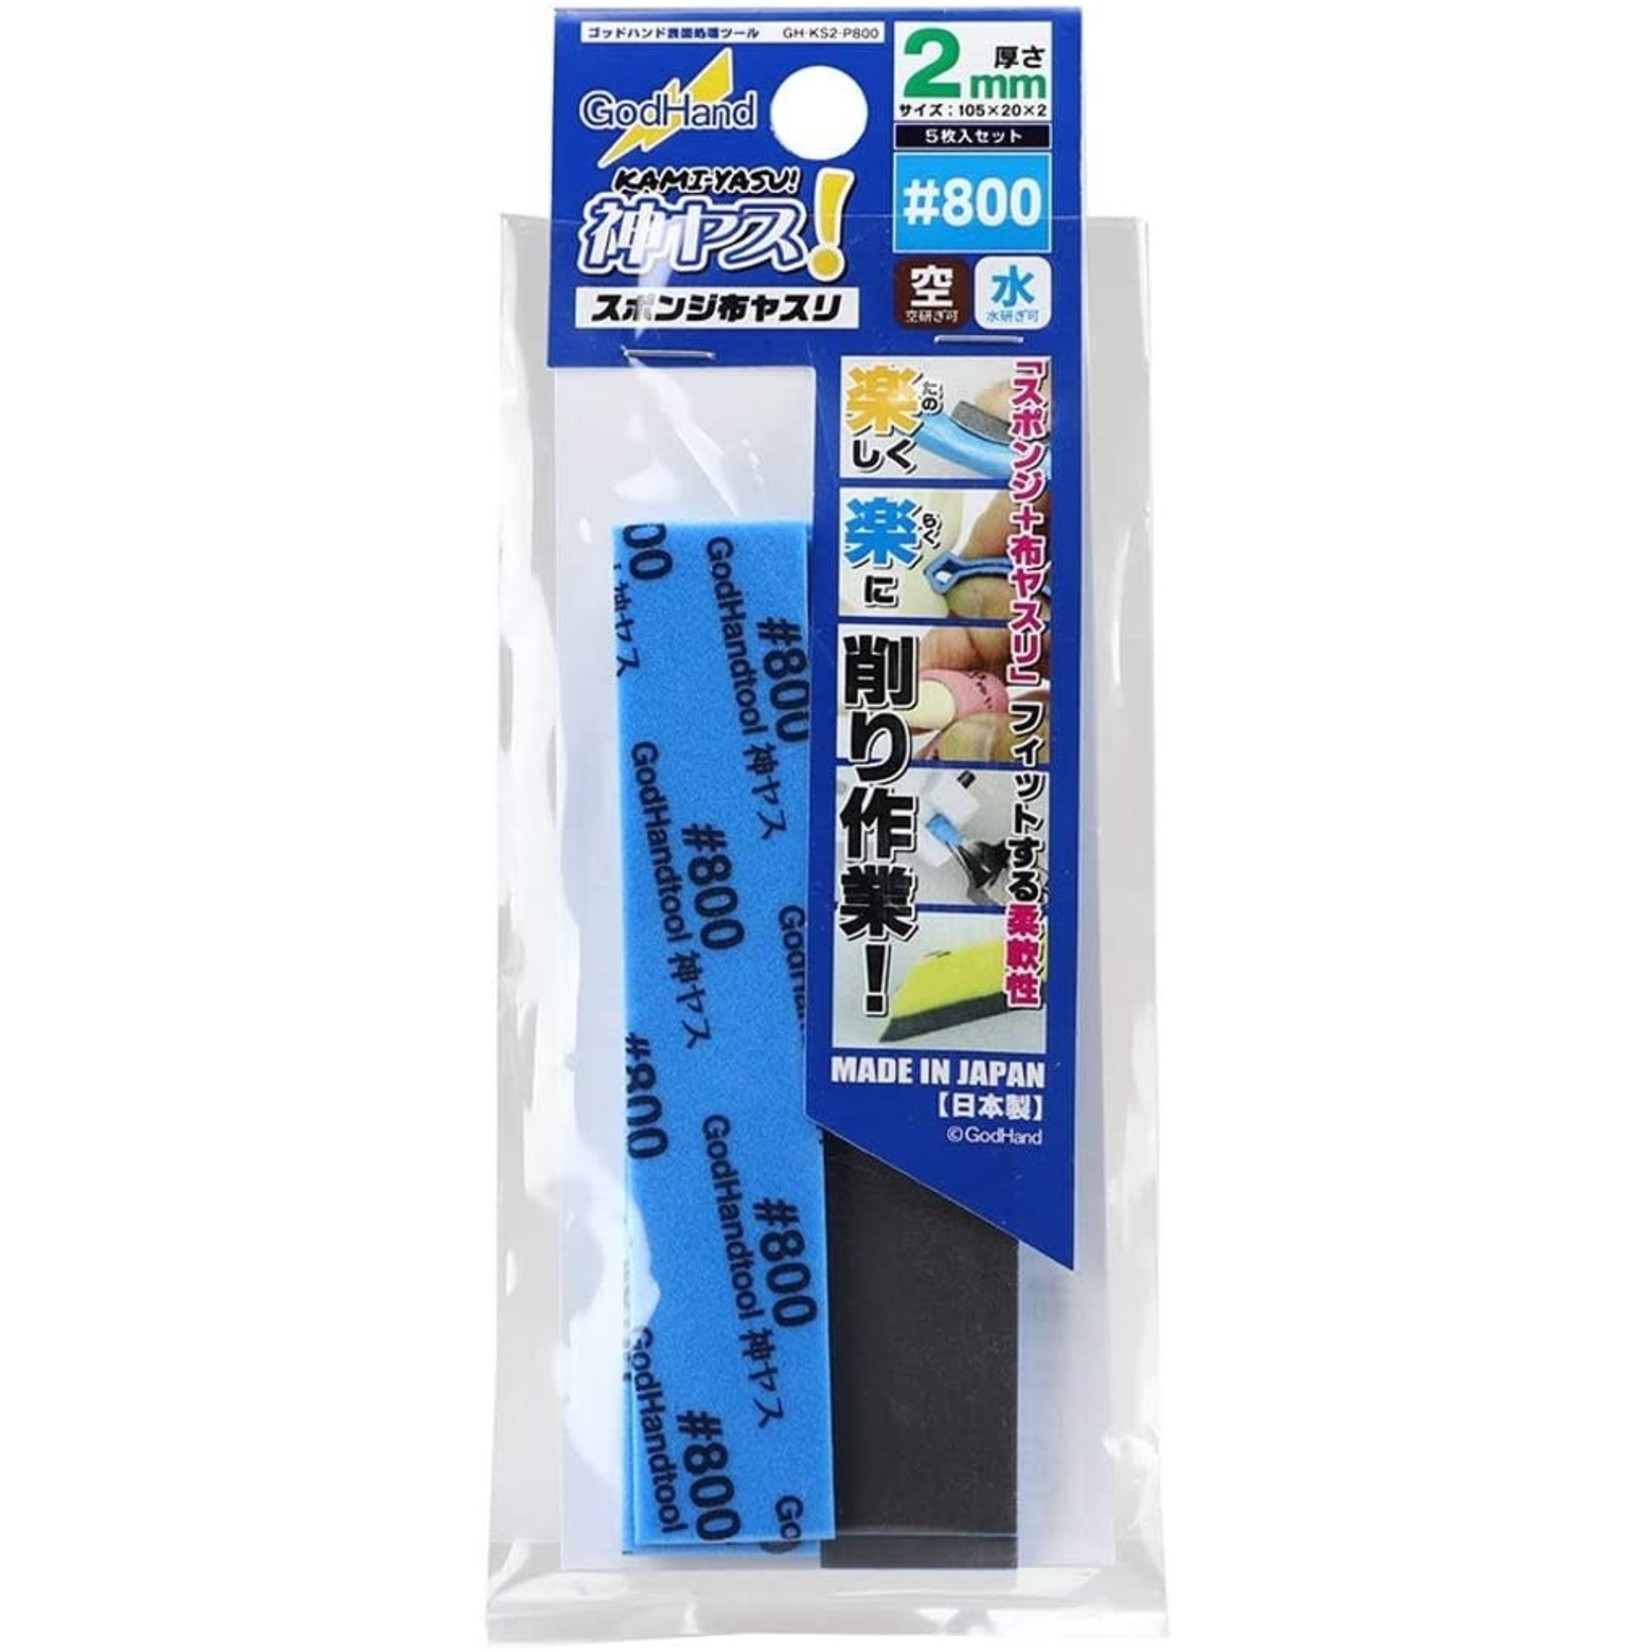 GodHand GodHand Kamiyasu Sanding Sponge Stick 2mm - #800 (4) Set